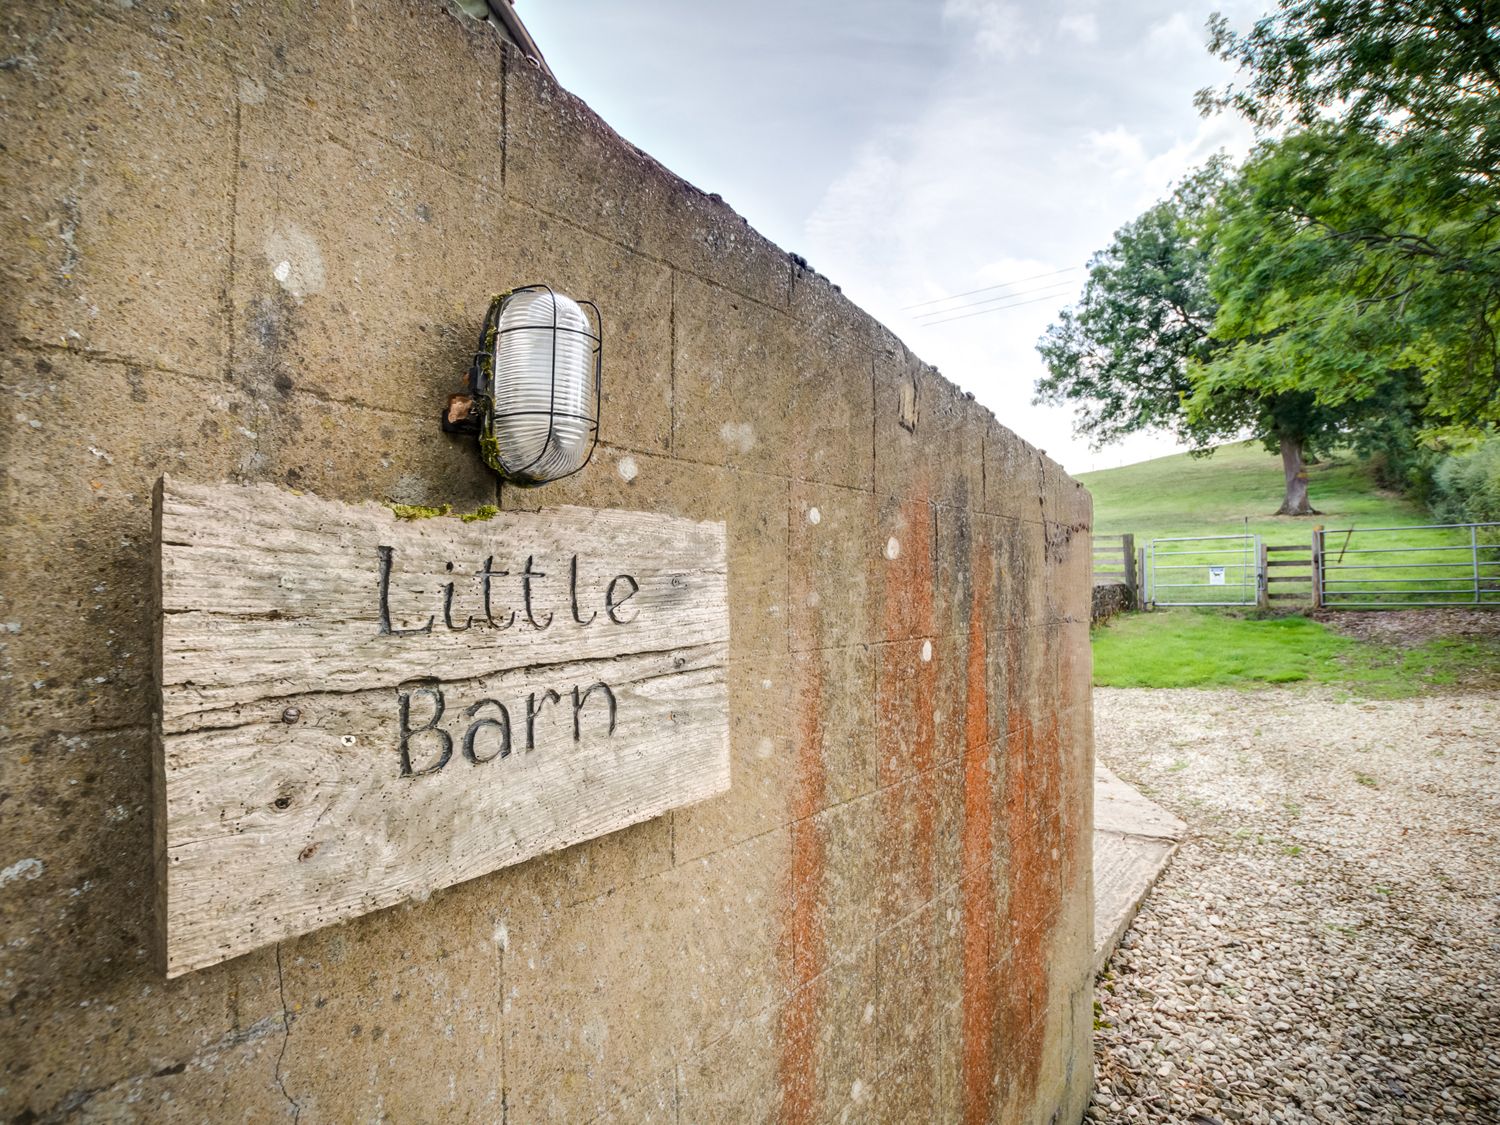 Little Barn, Warwickshire